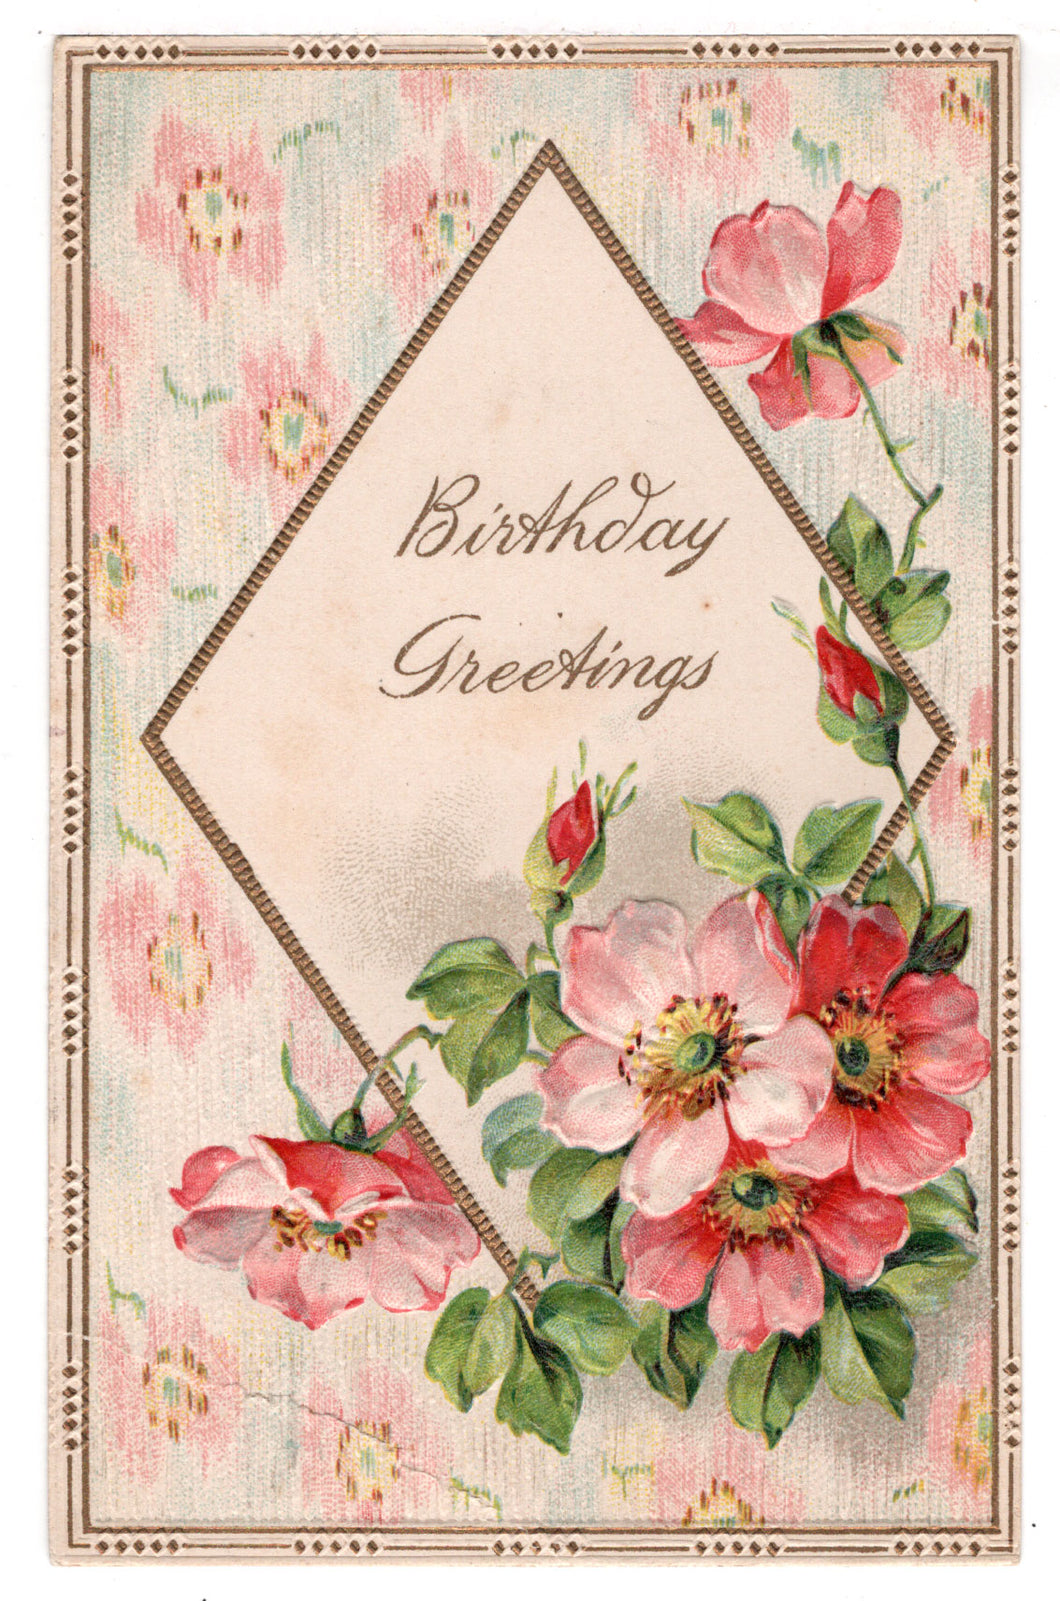 Birthday Greetings Vintage Original Postcard # 4551 - Post Marked February 24, 1910